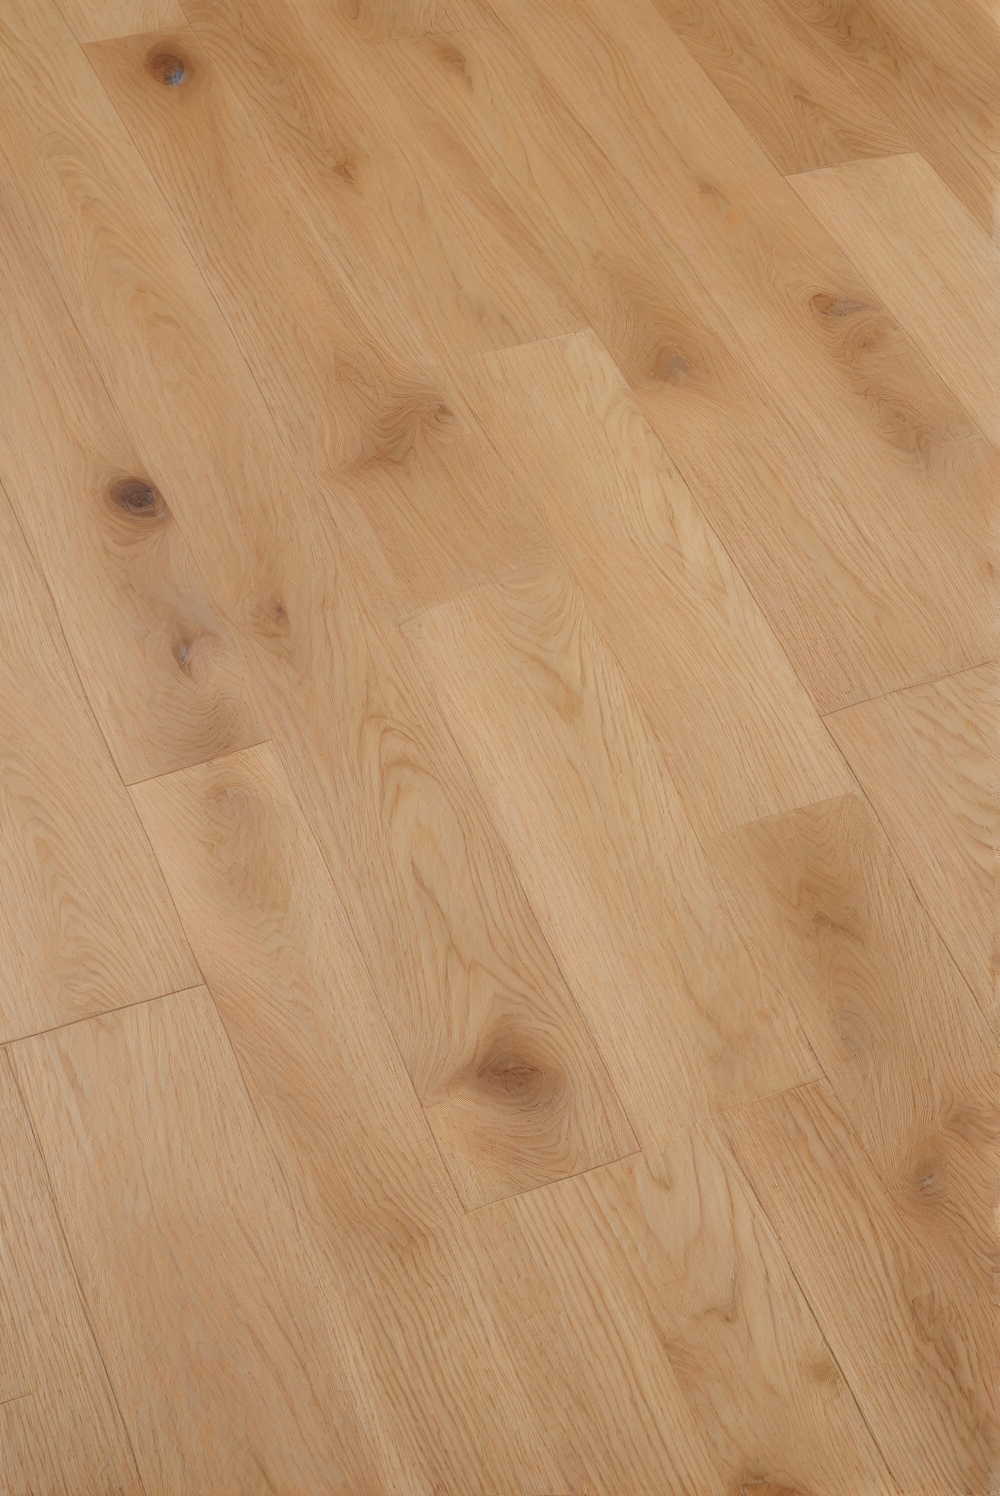 oak wood flooring, flooring options, hardwood flooring installation, wood floor finishes, different types of oak flooring, oak floor maintenance, oak flooring prices